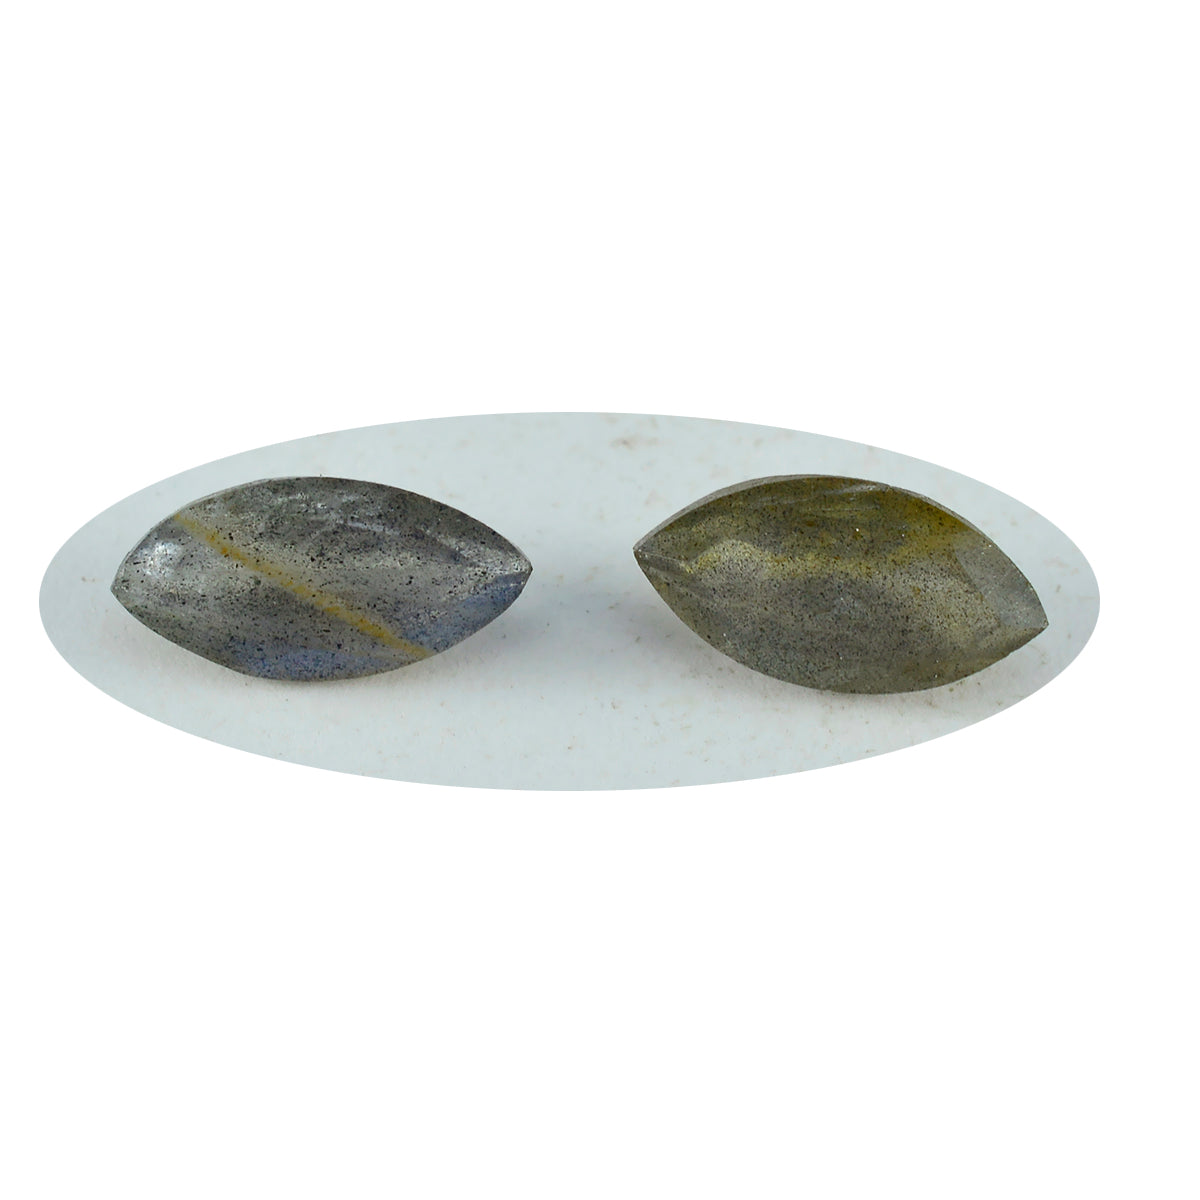 riyogems 1шт натуральный серый лабрадор ограненный 10х20 мм форма маркиза качественный драгоценный камень